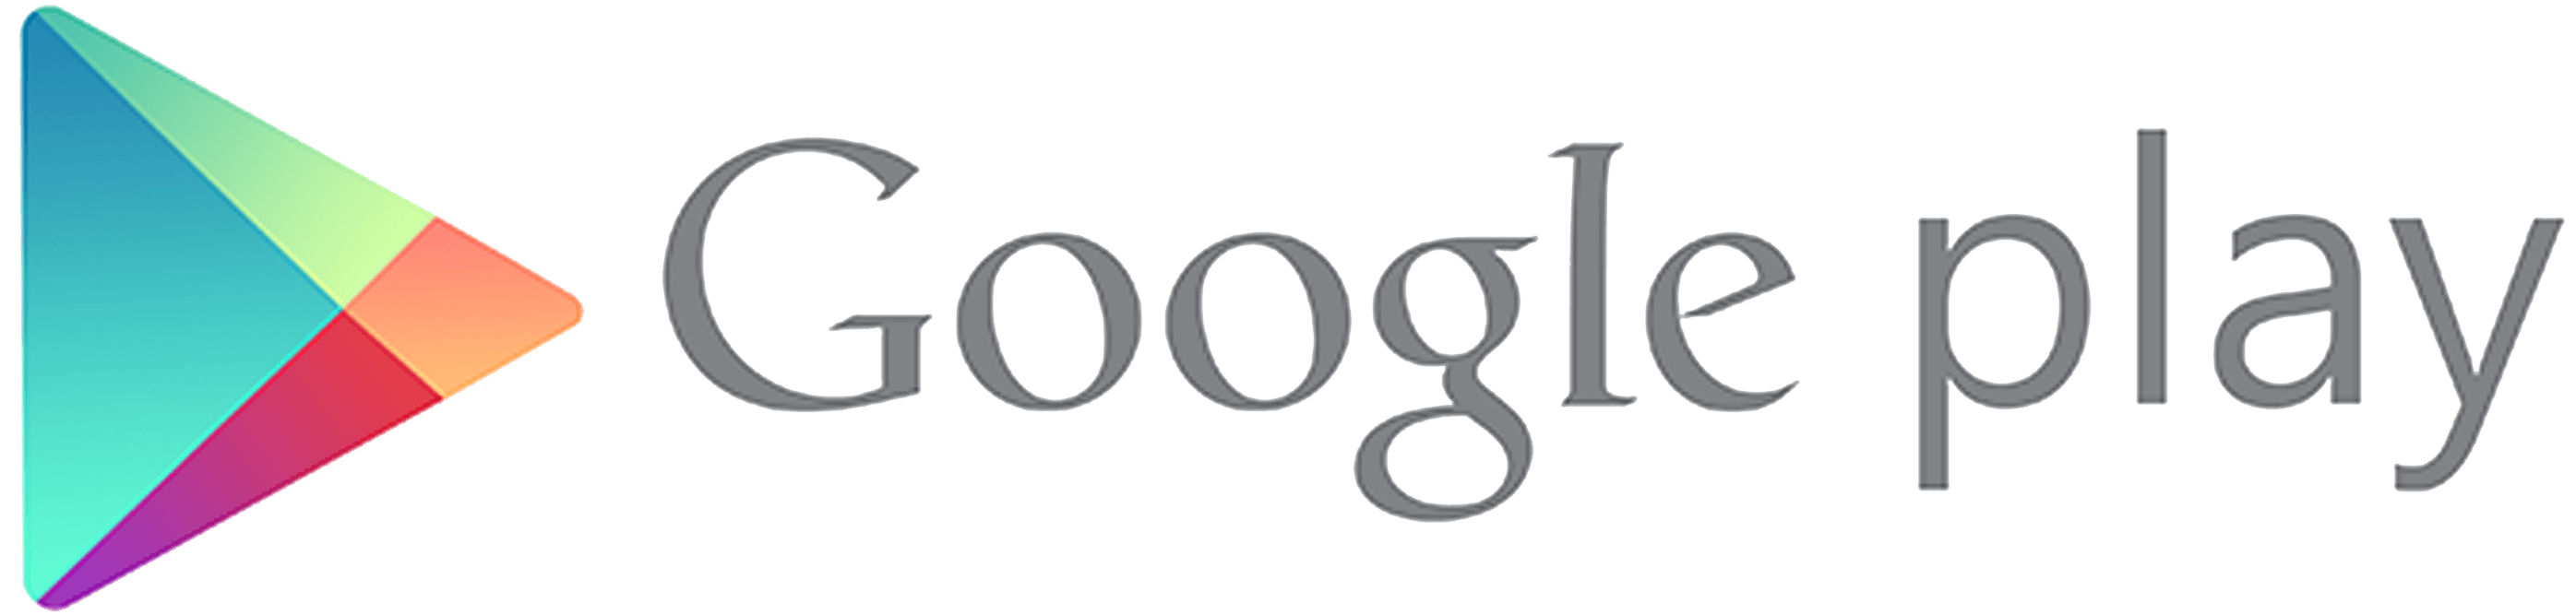 Google Play Logo - Google-Play-Logo - The ID Group